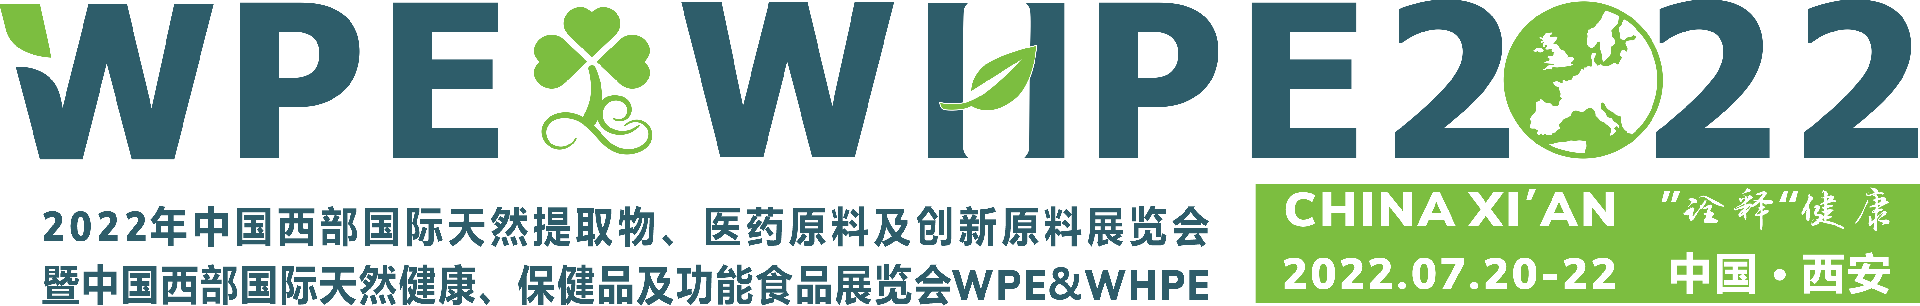 提取物展 | 天然提取物展 |天然提取物健康原料产业链展 WPE&WHPE2022